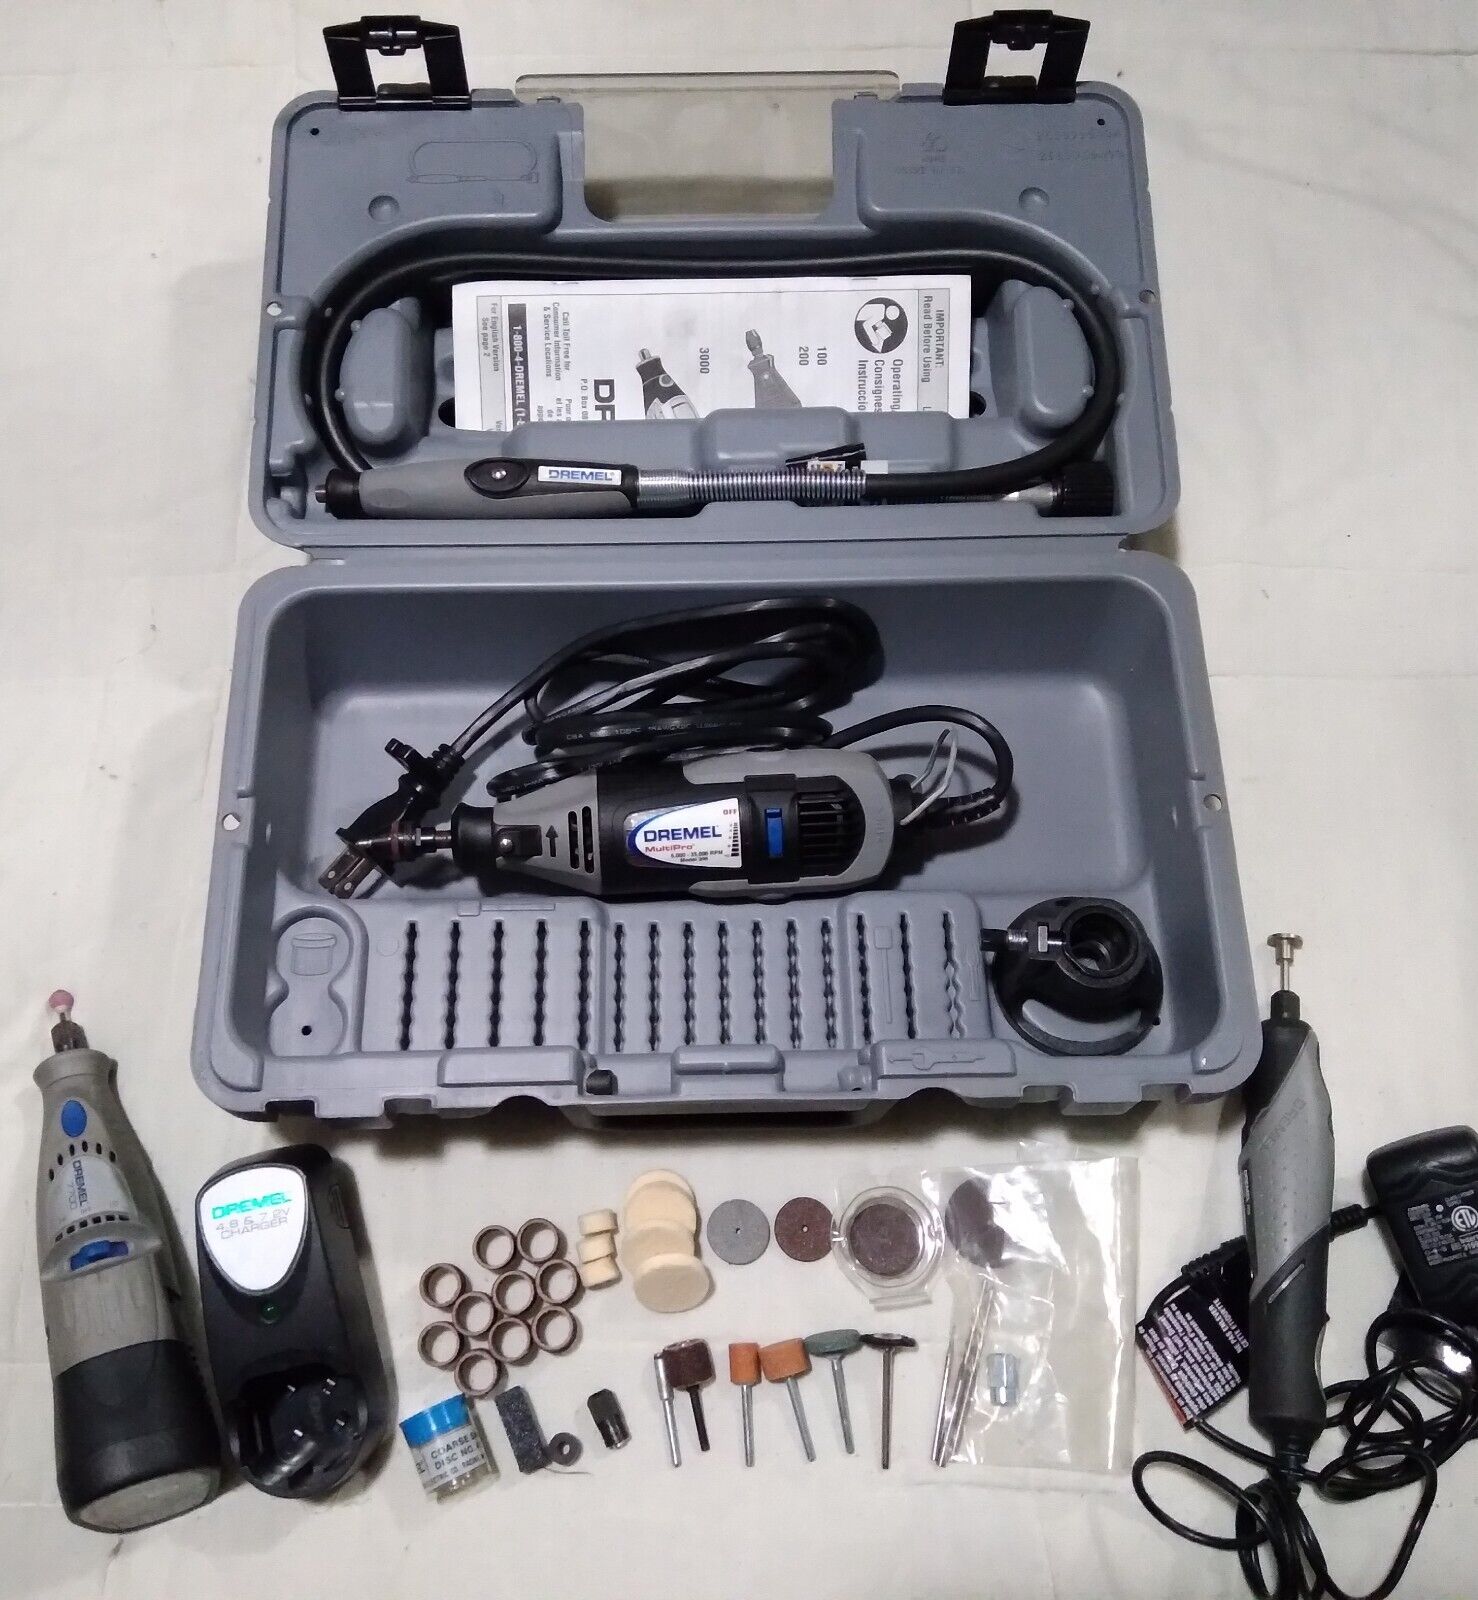 Dremel 7700-1/15 MultiPro 7.2-Volt Cordless Rotary Tool Kit